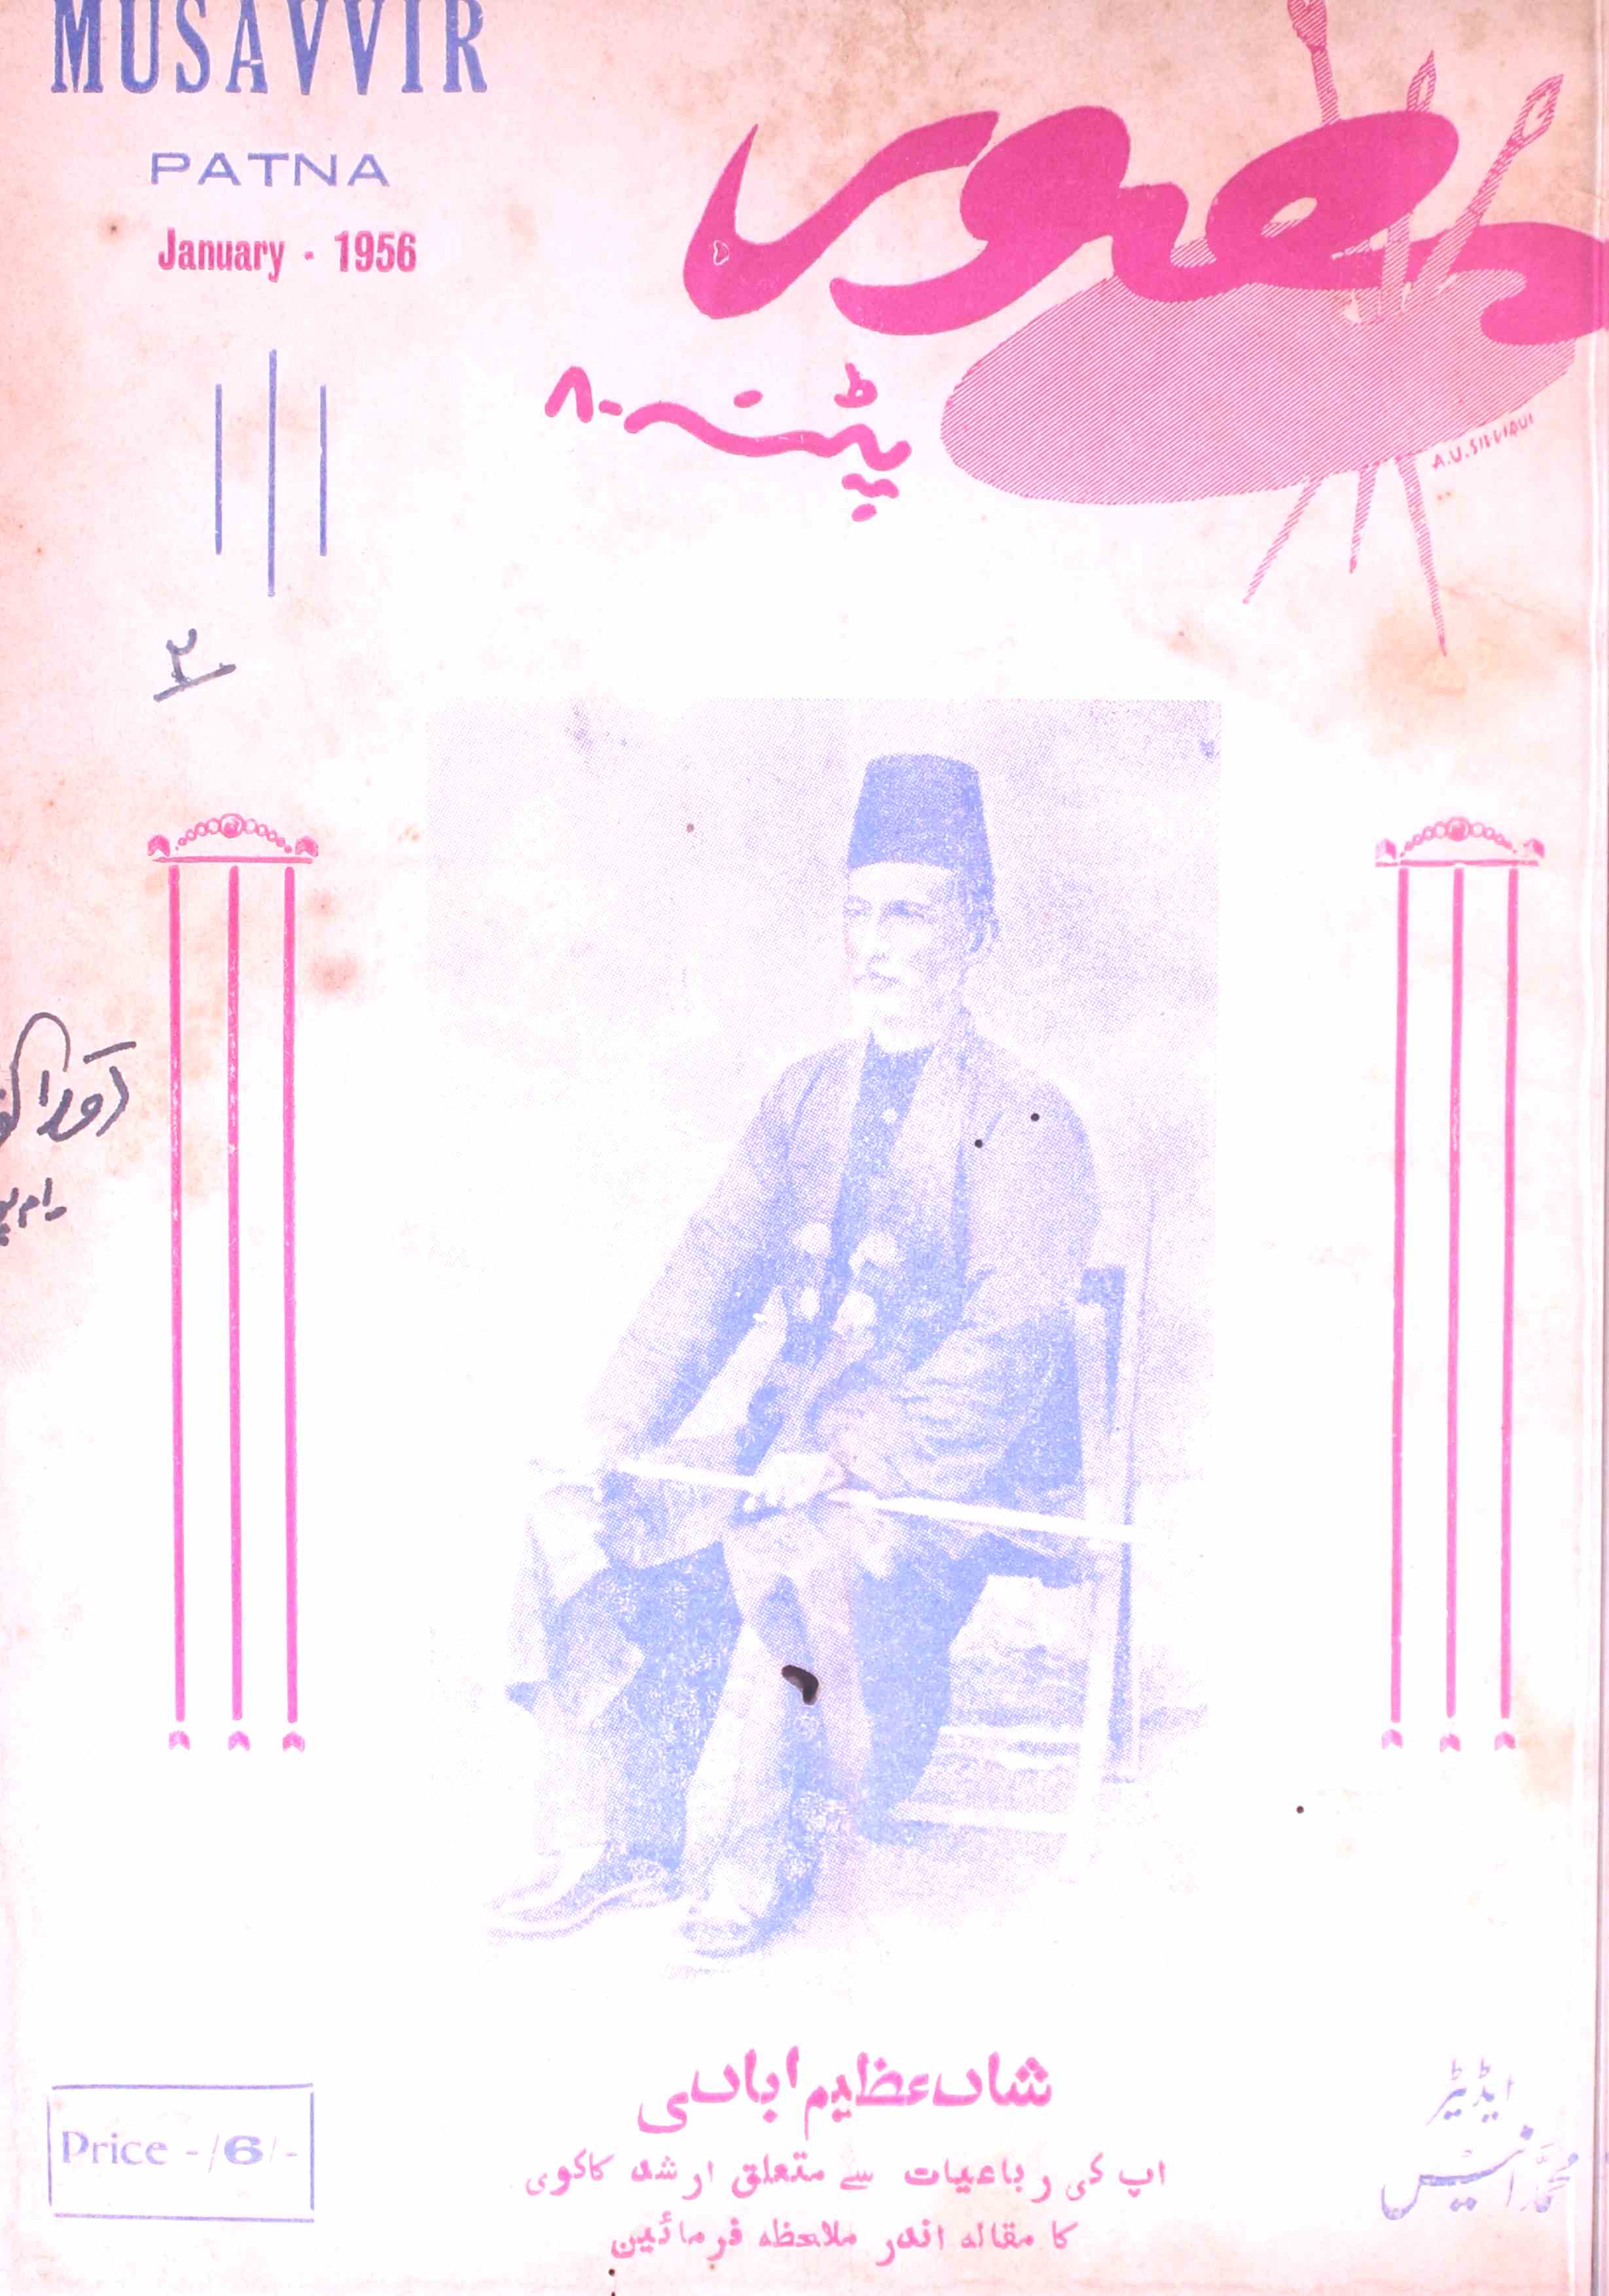 Musawwir Jild 2 No. 1 - Jan. 1956